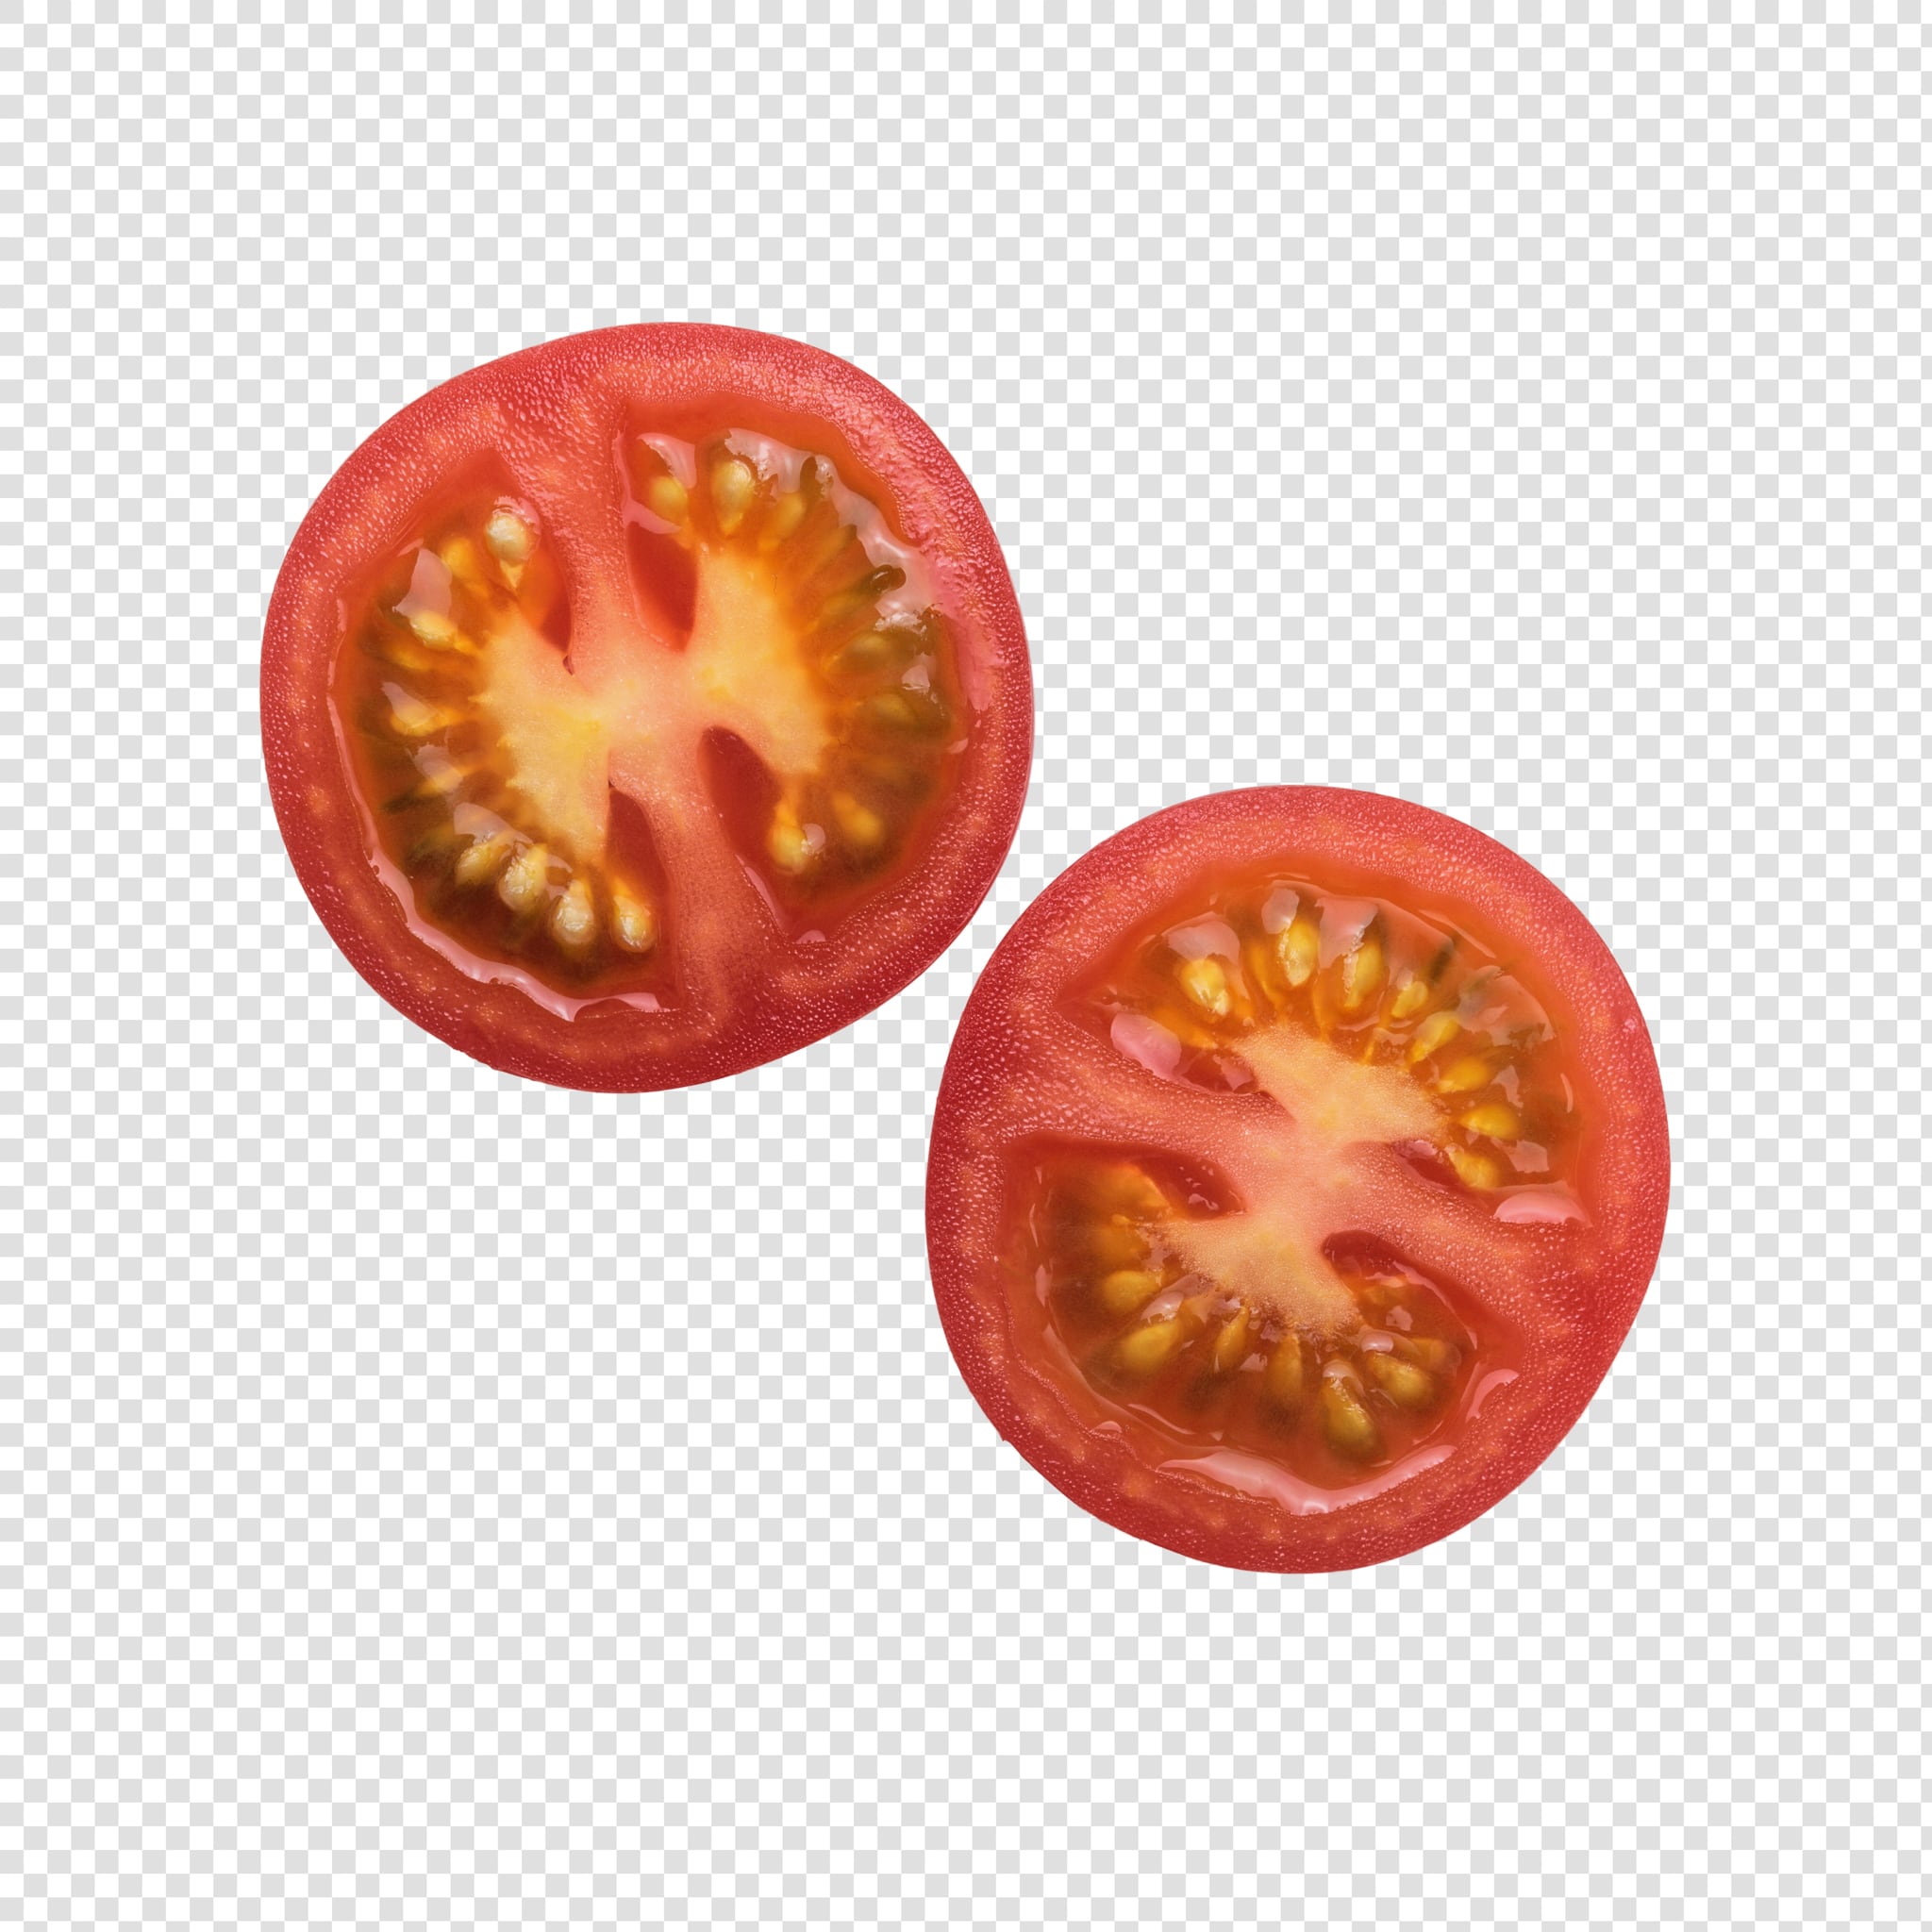 Tomato PSD layered image